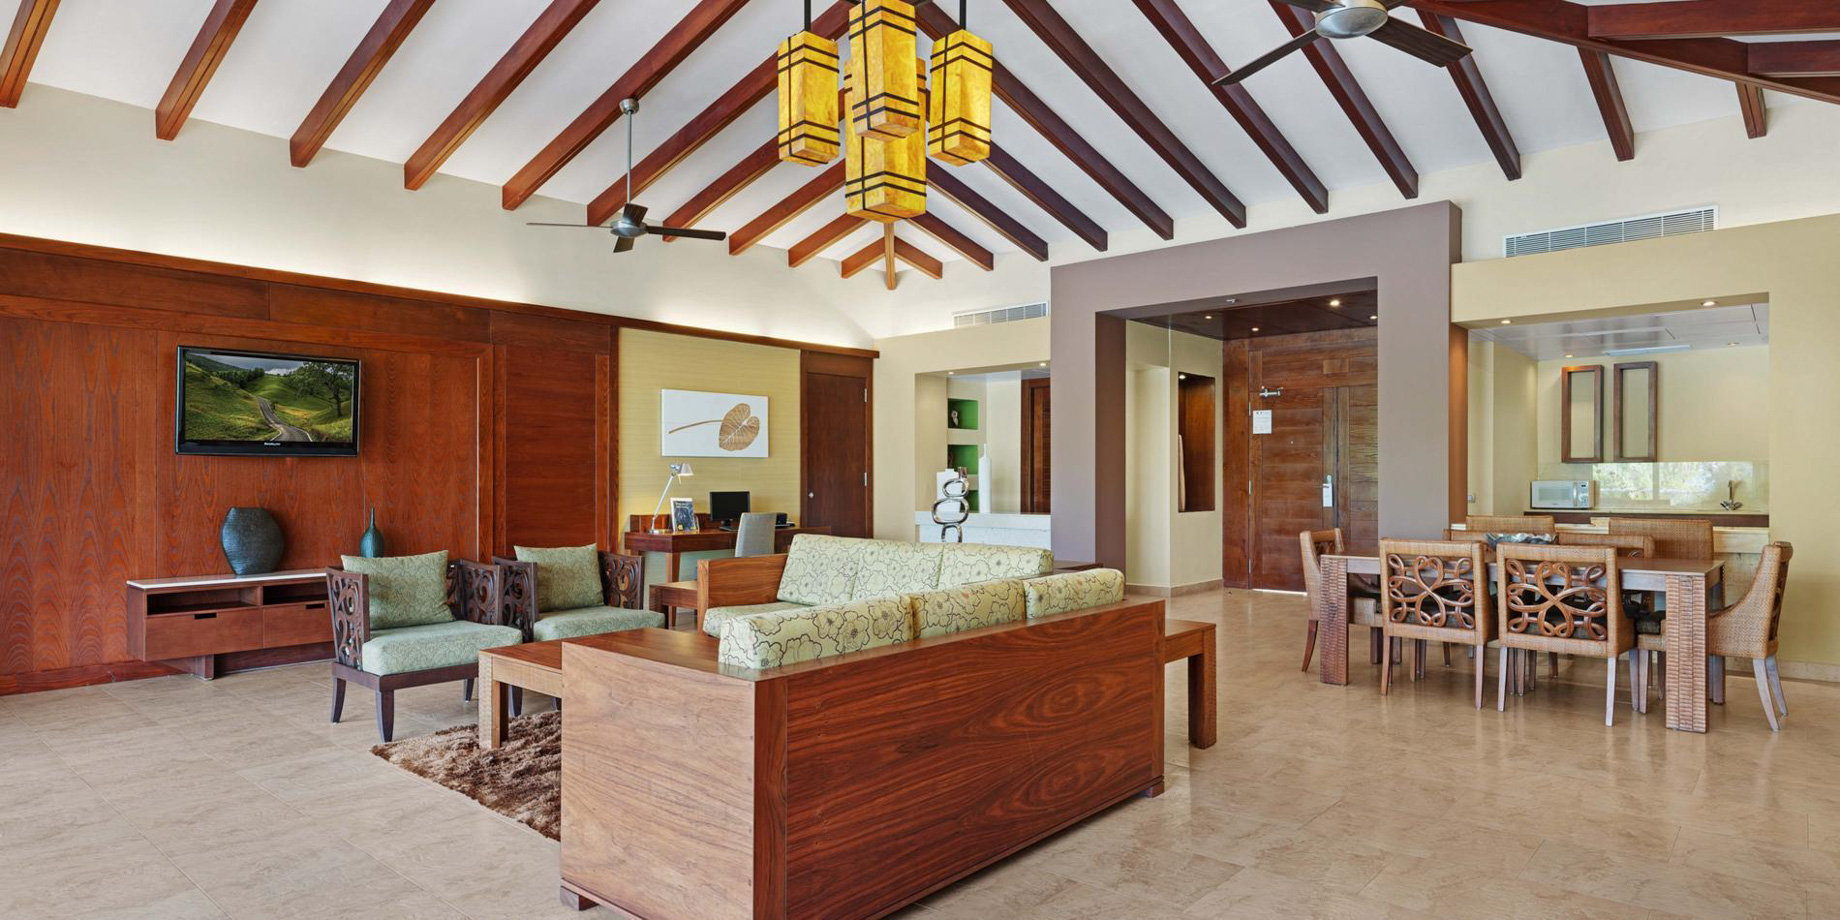 Barceló Bávaro Palace Hotel Grand Resort – Punta Cana, Dominican Republic – Master Suite Sea Front View Premium Level